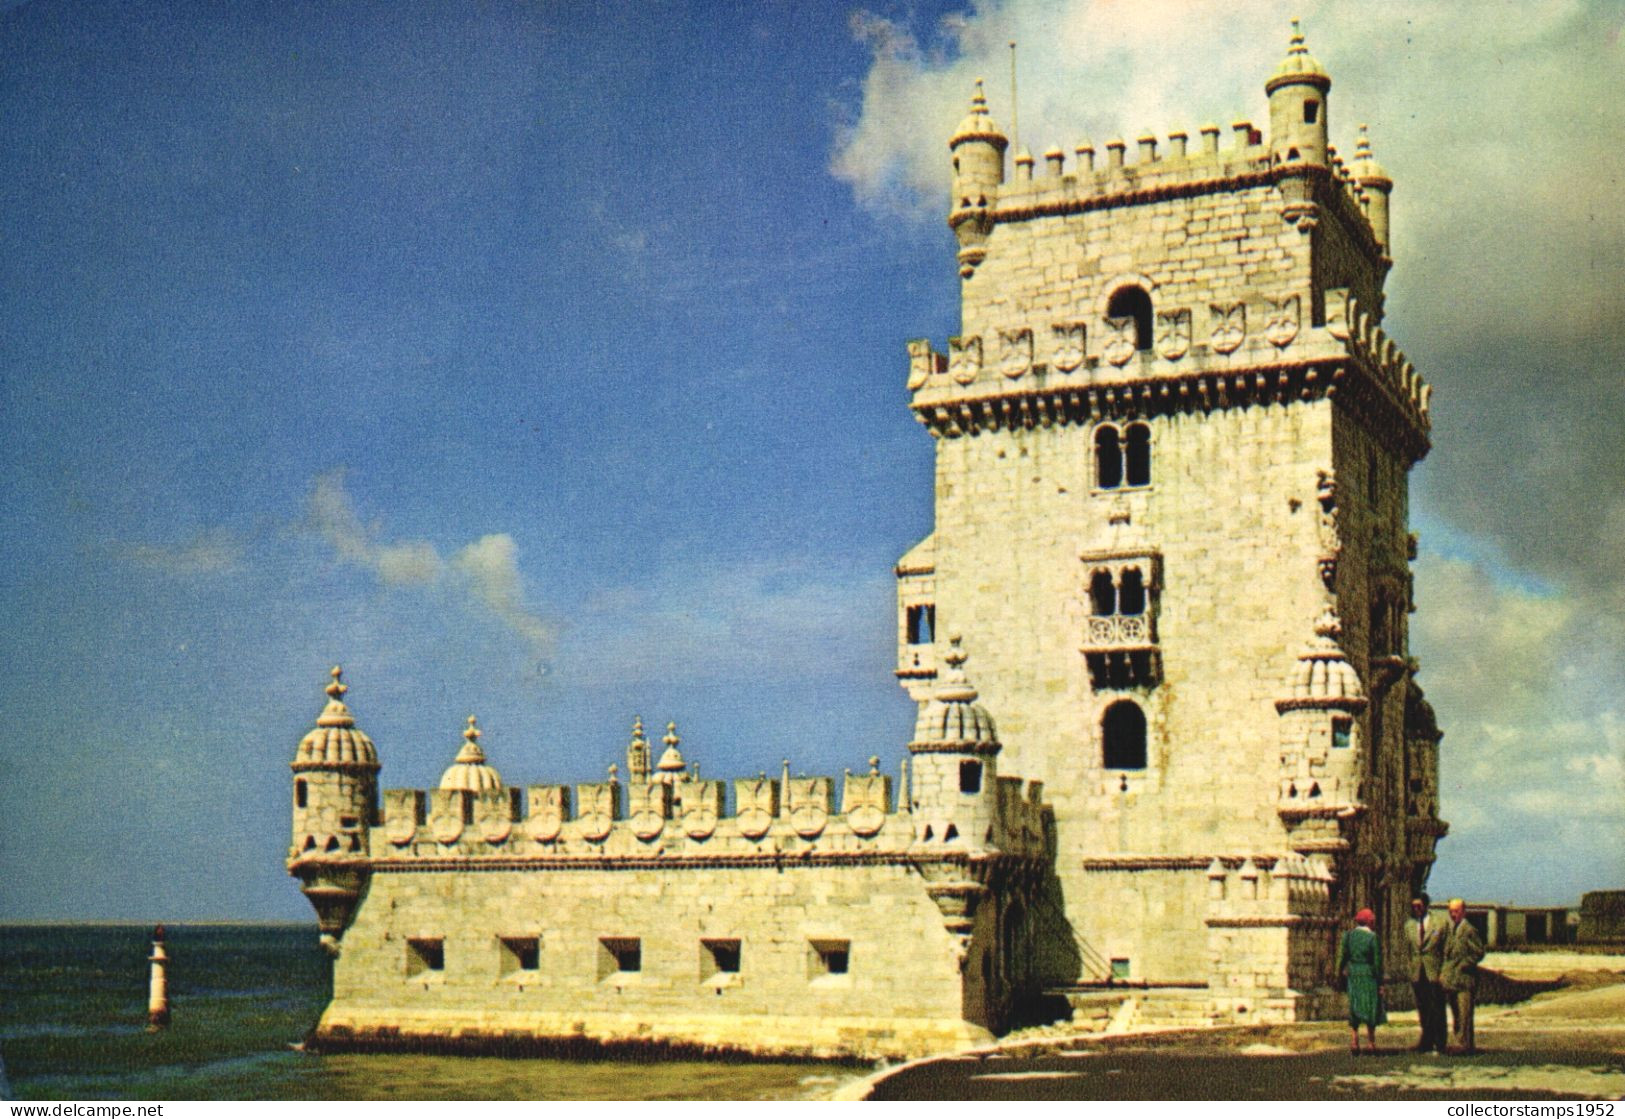 LISBOA, TOWER OF BELEM, ARCHITECTURE, LIGHT HOUSE, PORTUGAL, POSTCARD - Lisboa